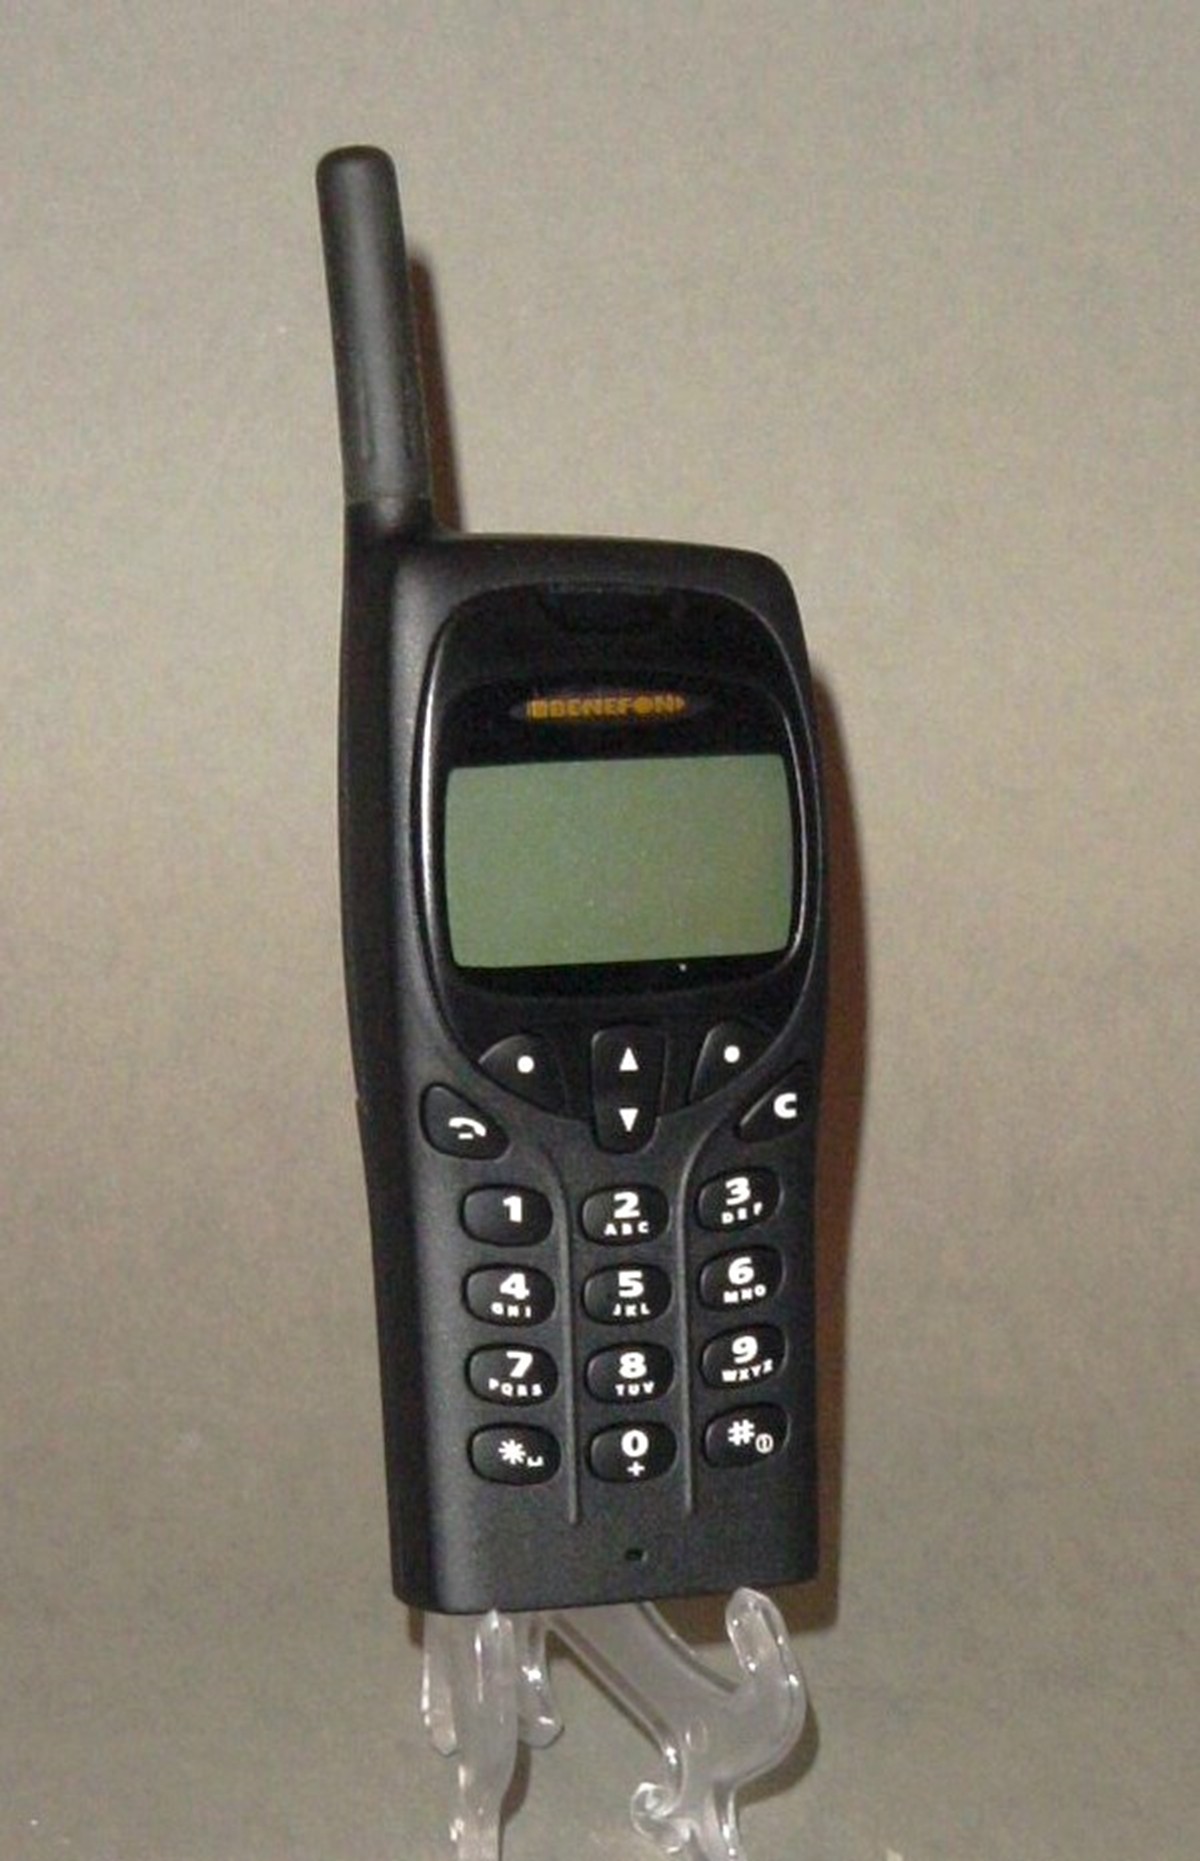 Benefon mobiltelefon (Postamúzeum CC BY-NC-SA)